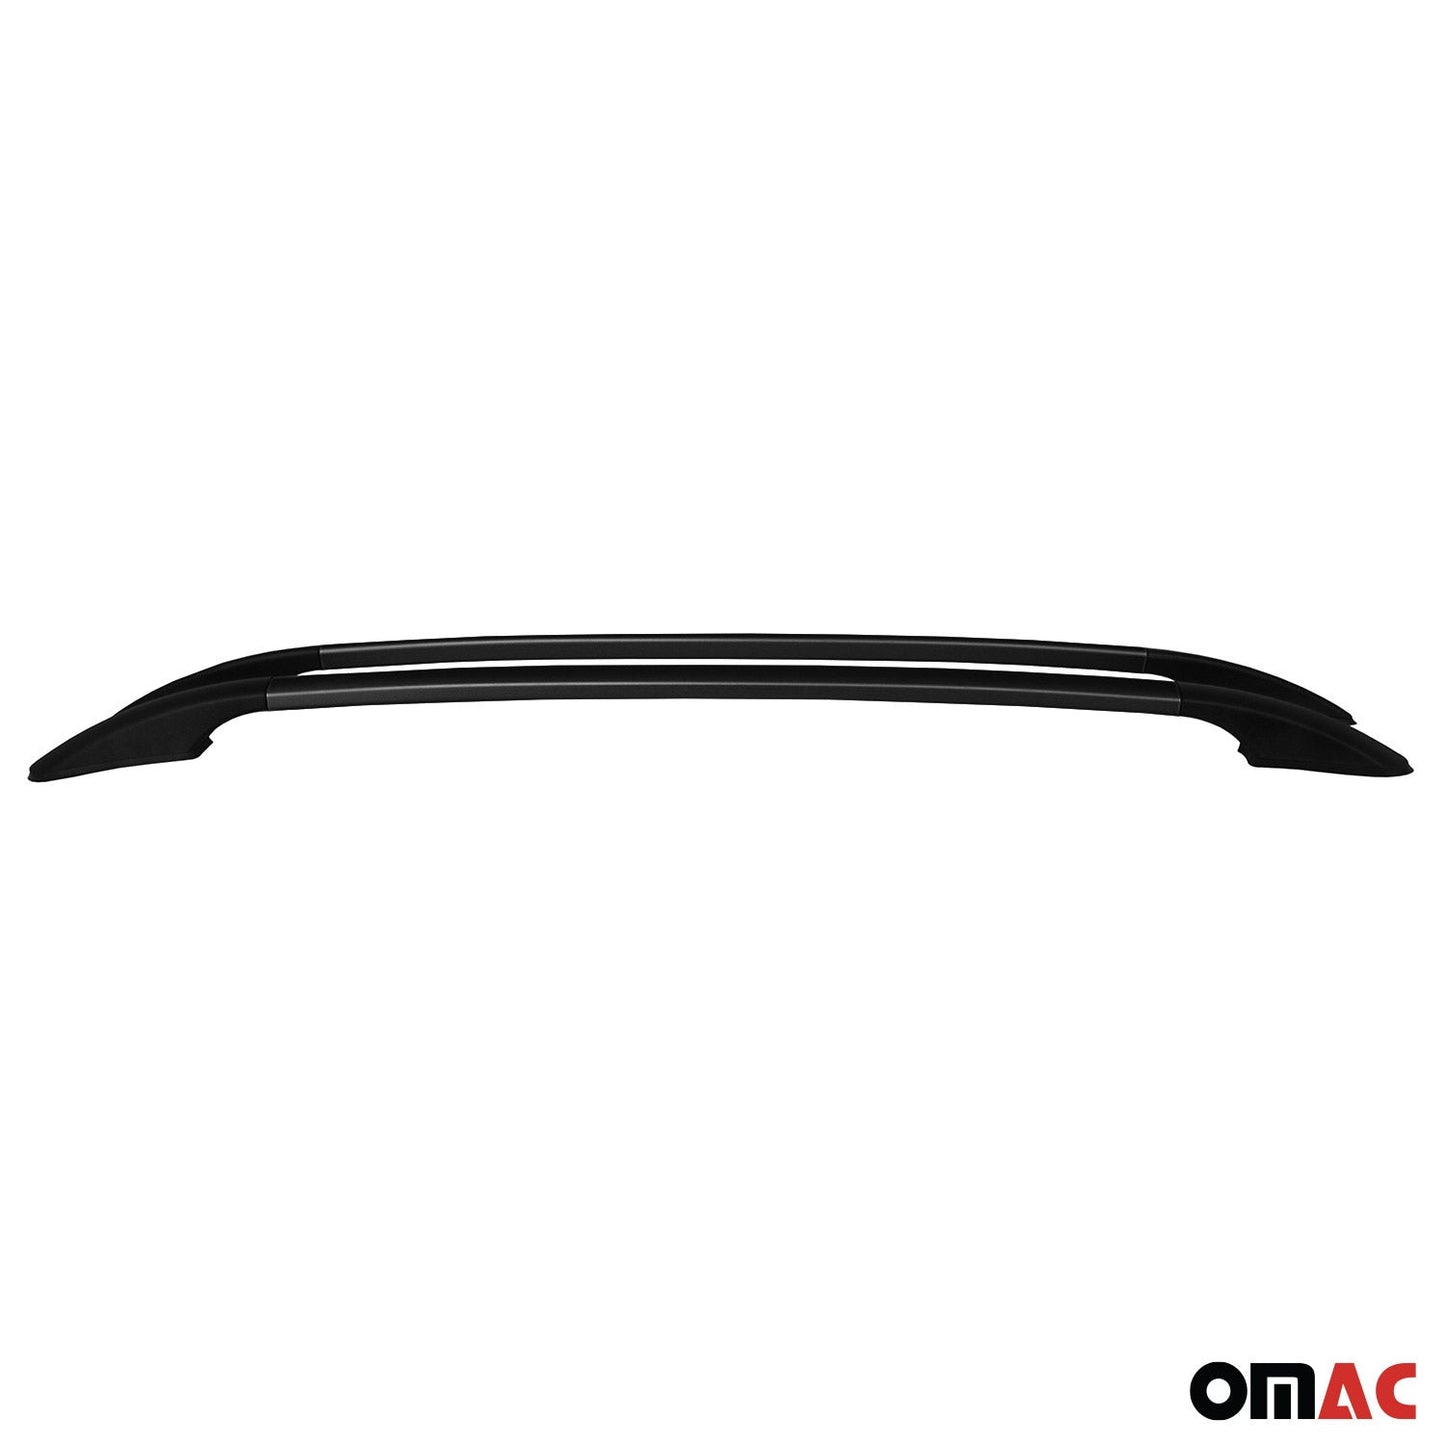 OMAC Roof Rack Side Rails Aluminium for Nissan Qashqai 2007-2014 Black 2Pcs U012938